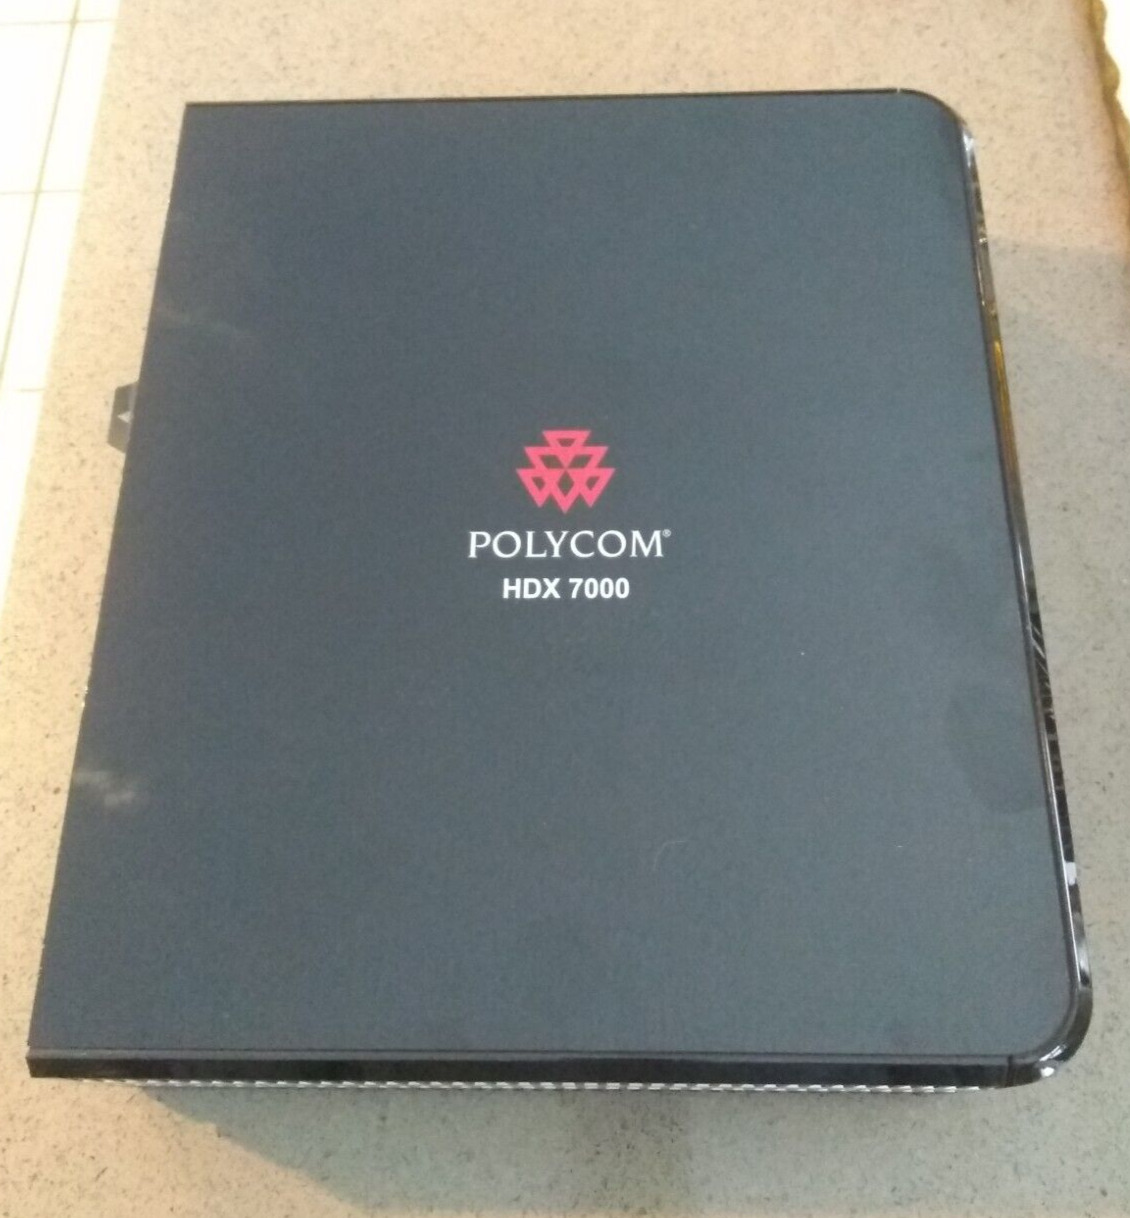 Polycom HDX 7000 HD NTSC Video Conferencing System